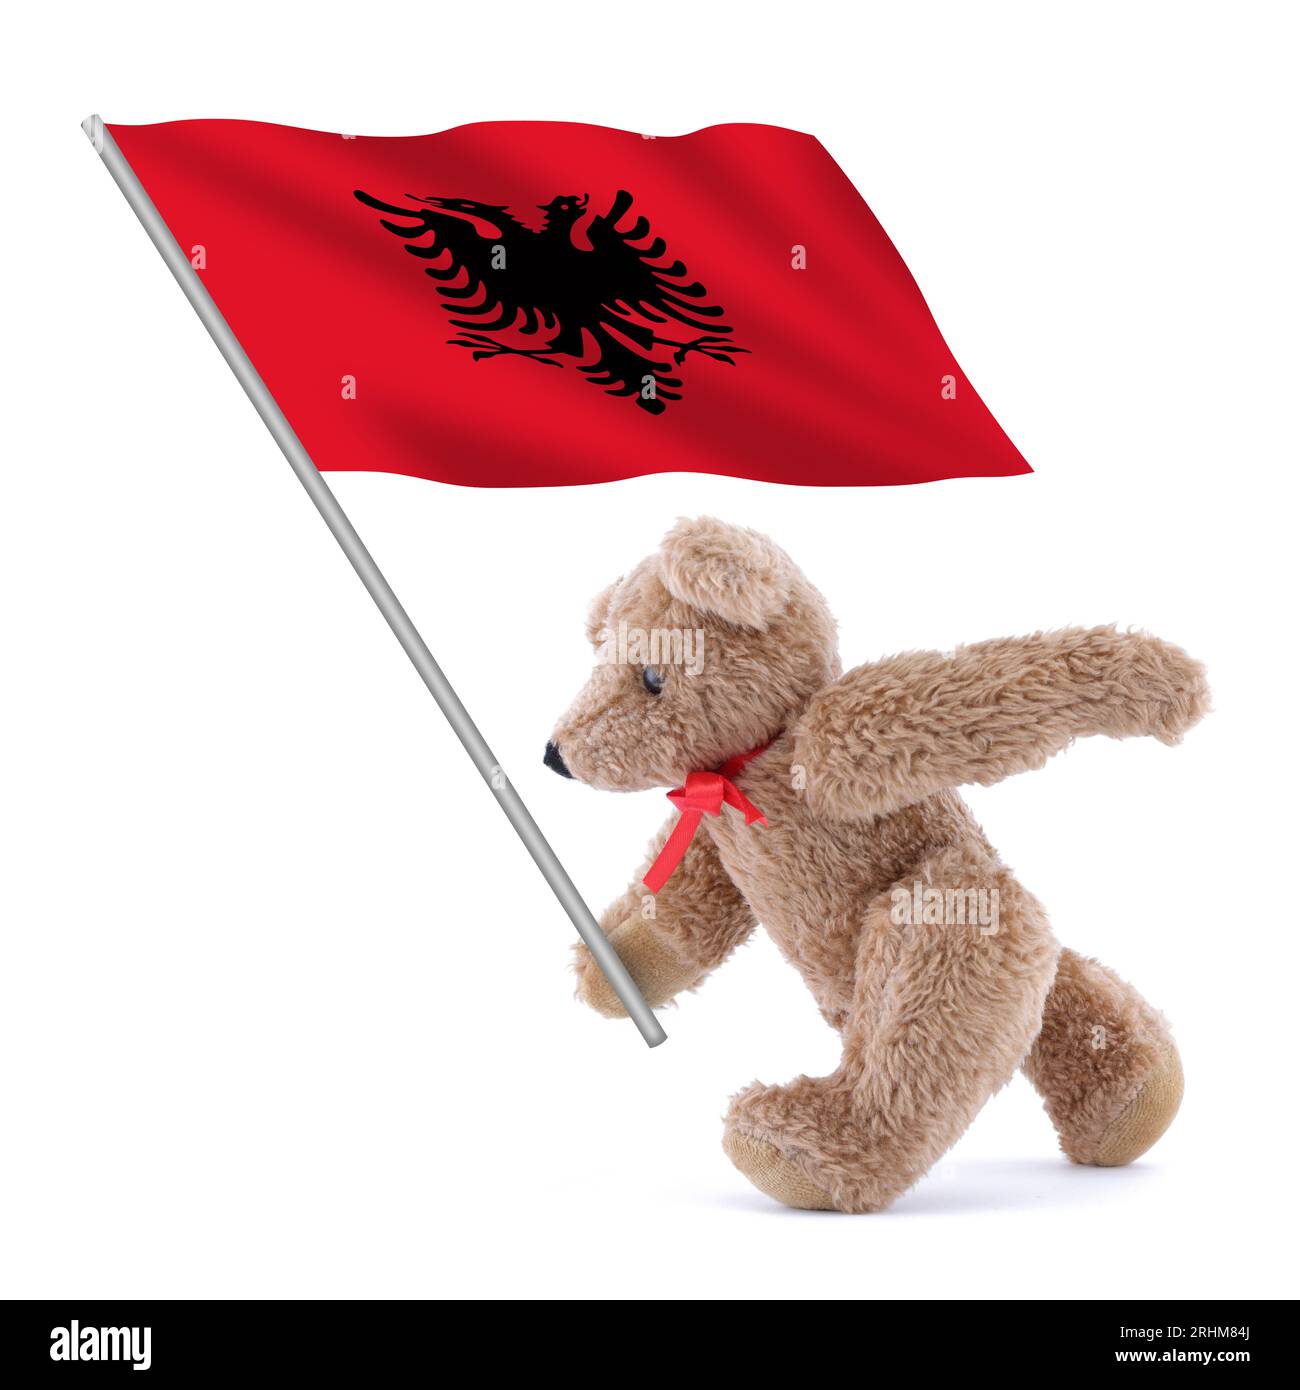 Albania flag being carried by a cute teddy bear Stock Photo